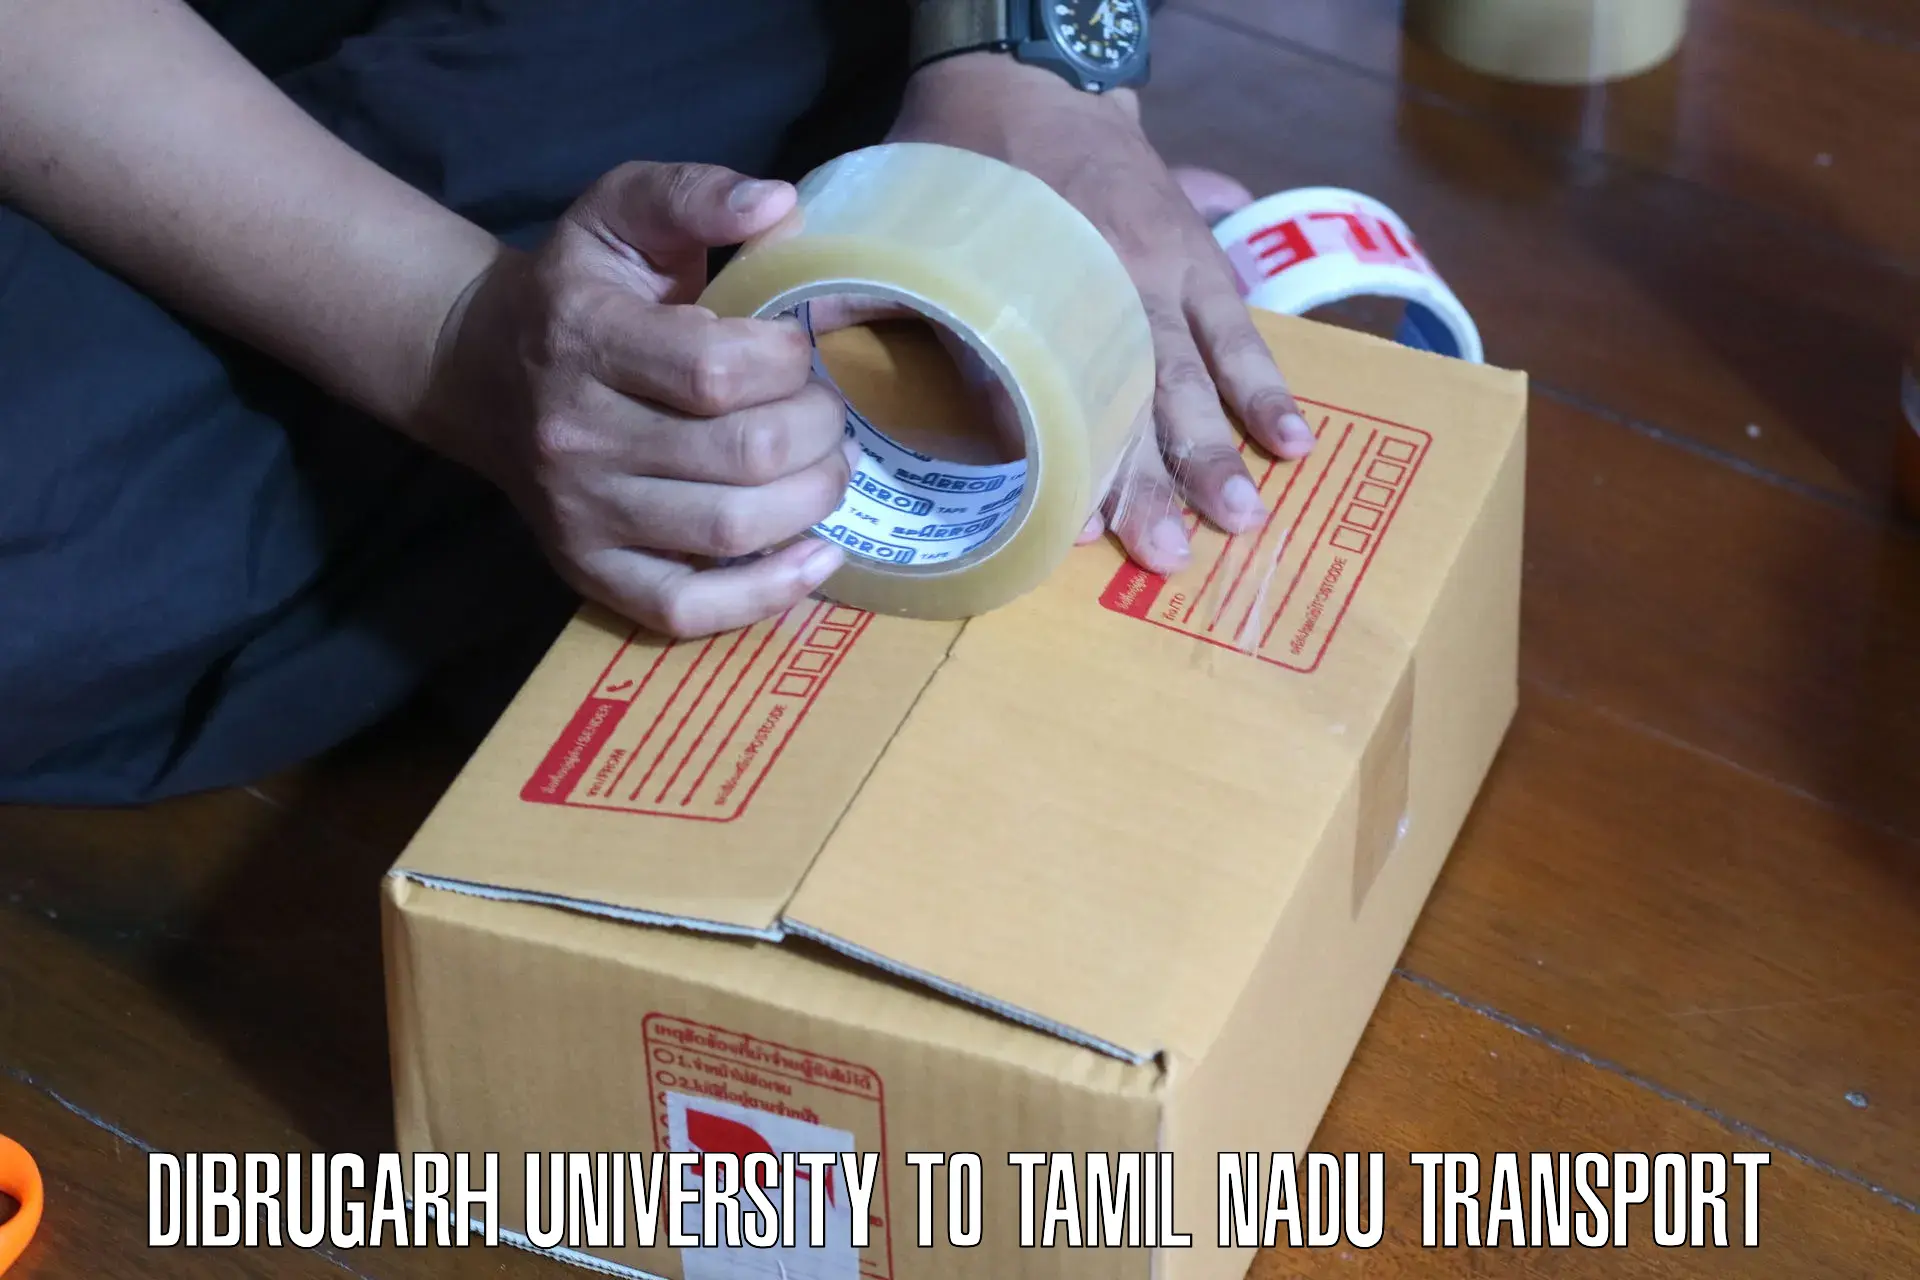 Lorry transport service Dibrugarh University to Tamil Nadu